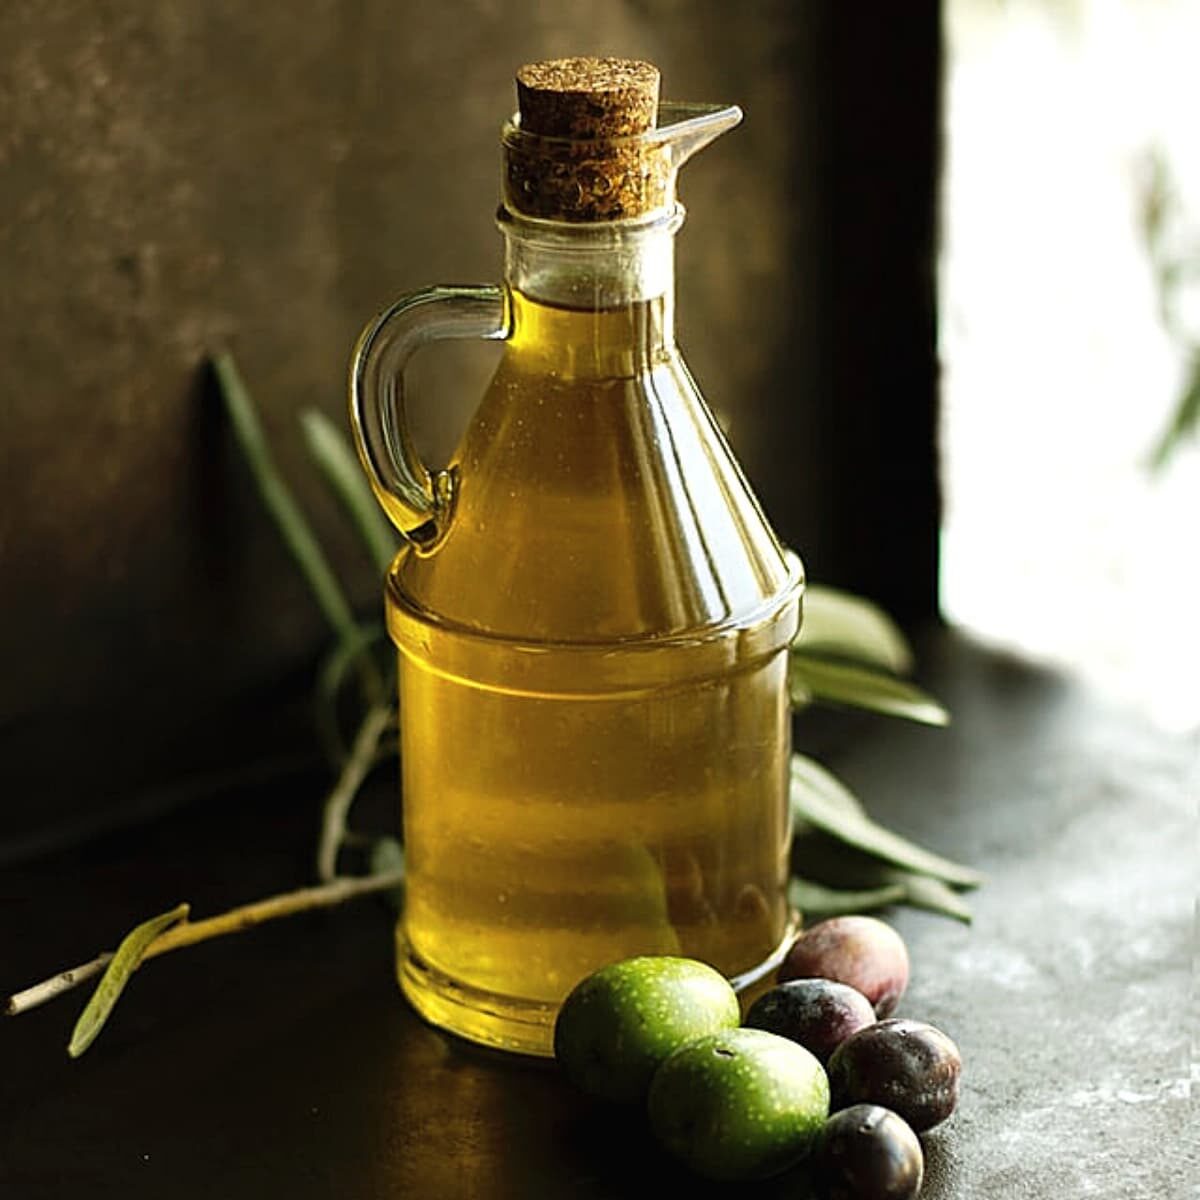 bottle of olive oil on table.